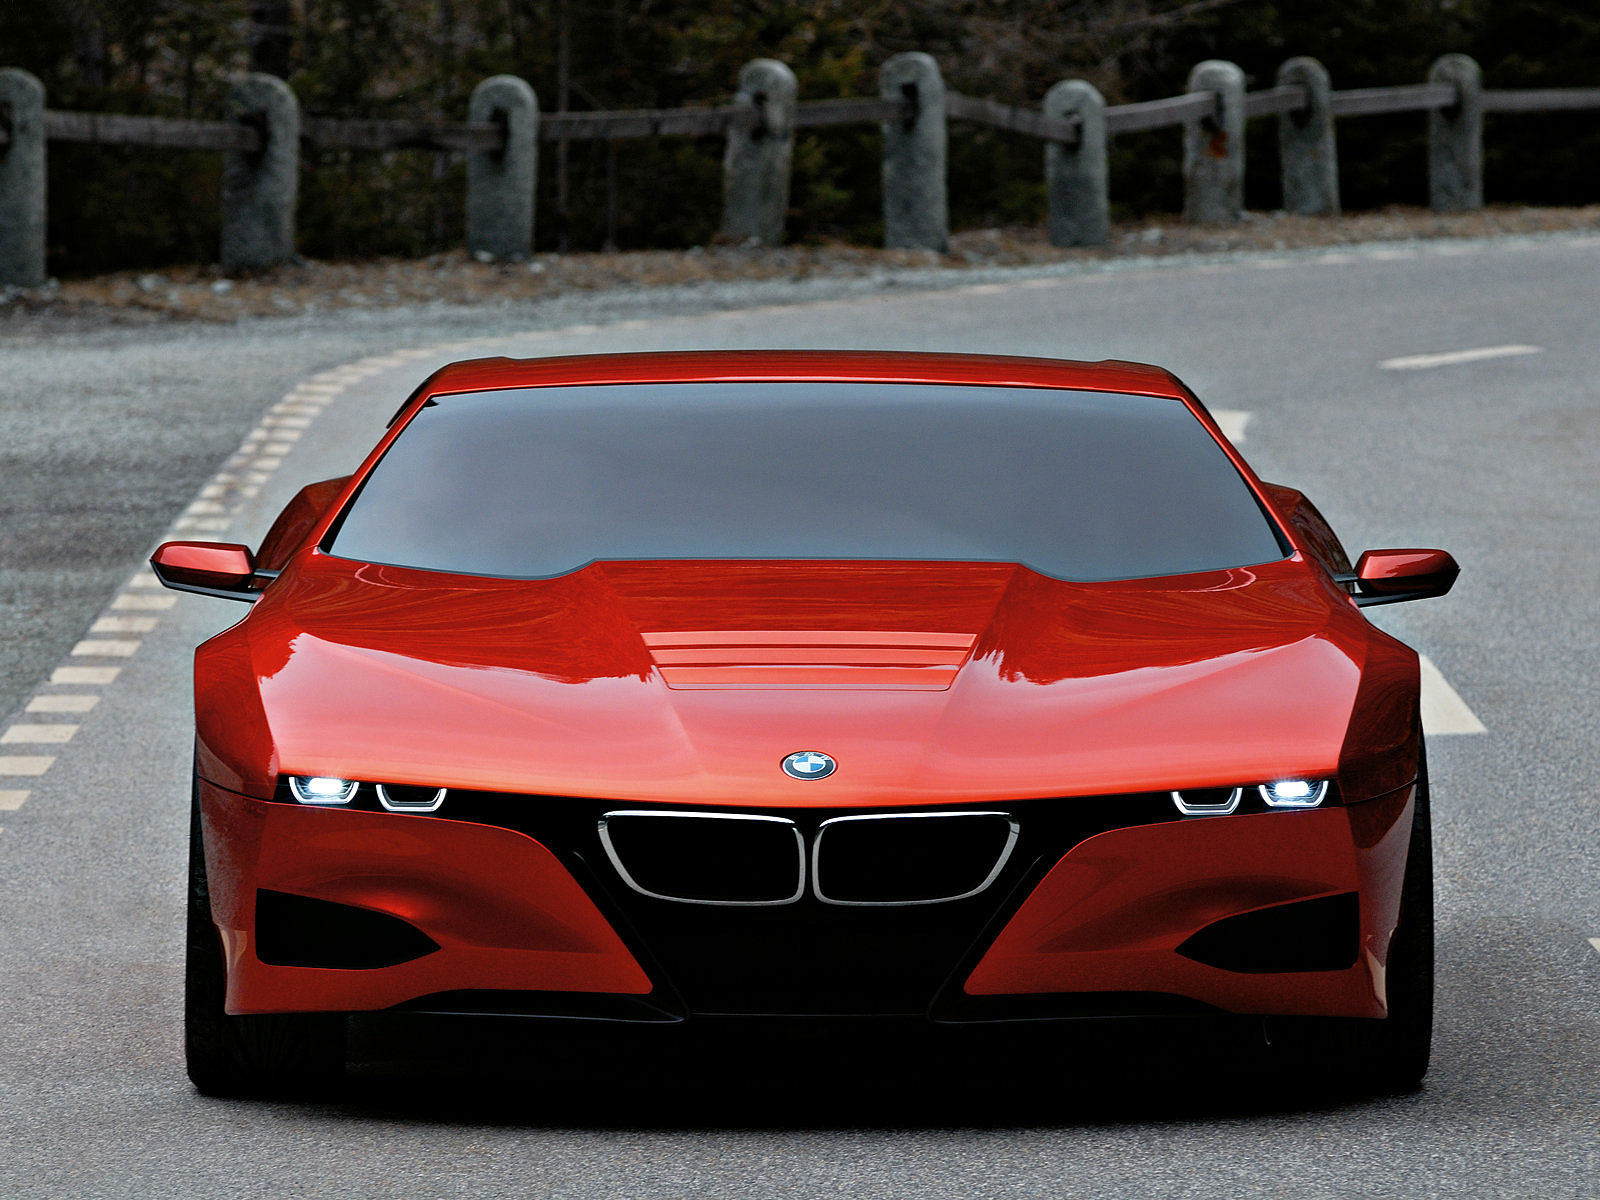 https://blogger.googleusercontent.com/img/b/R29vZ2xl/AVvXsEgOhMt0b7jXLPPBj5D4qI4BC9DOhAXD8iYQmgZI9mjegfAvH81bzEjGvjQIaWGQn2iIxtUfmm9IkeBeH7RB1XBnC3chyphenhyphenwFlCA784wm-q_zjh5ULlHIk-xTyLKCMvaMck2R9q8qUQwQQyng/s1600/BMW-M1_Concept006.jpg